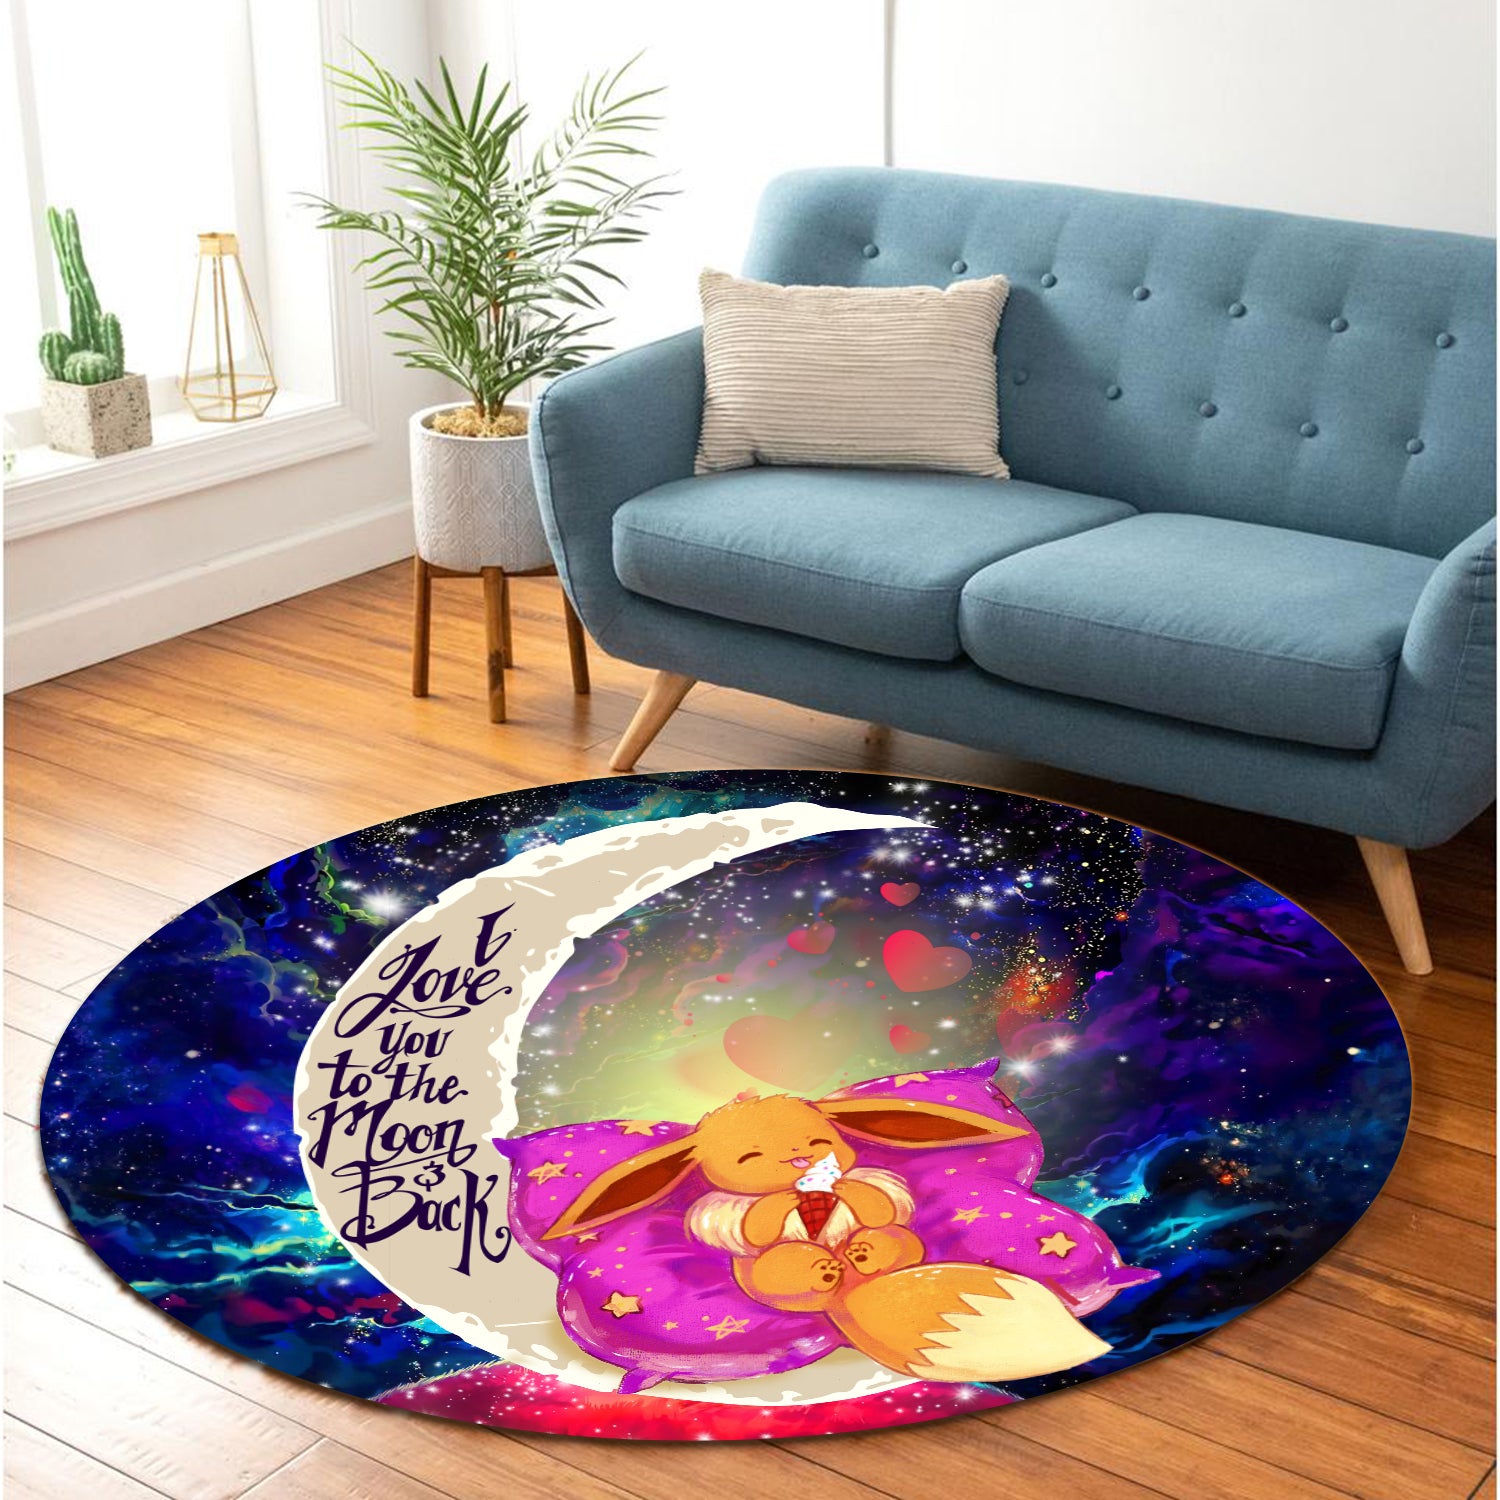 Cute Eevee Pokemon Sleep Night Love You To The Moon Galaxy Round Carpet Rug Bedroom Livingroom Home Decor Nearkii